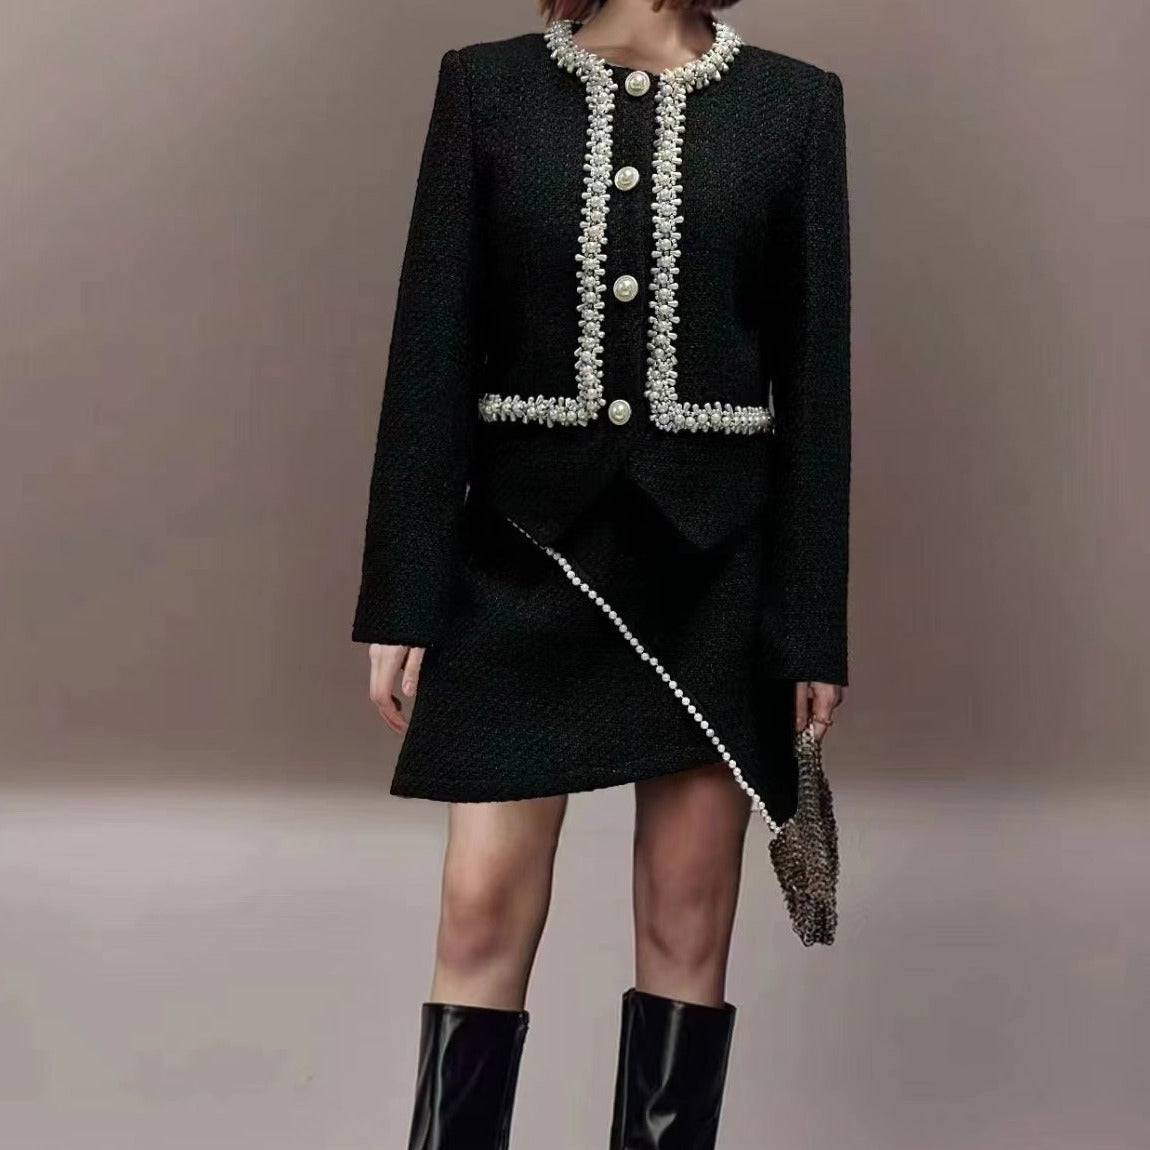 Lauren Spliced Pearl Top & Irregular Hem Skirt Set - Hot fashionista